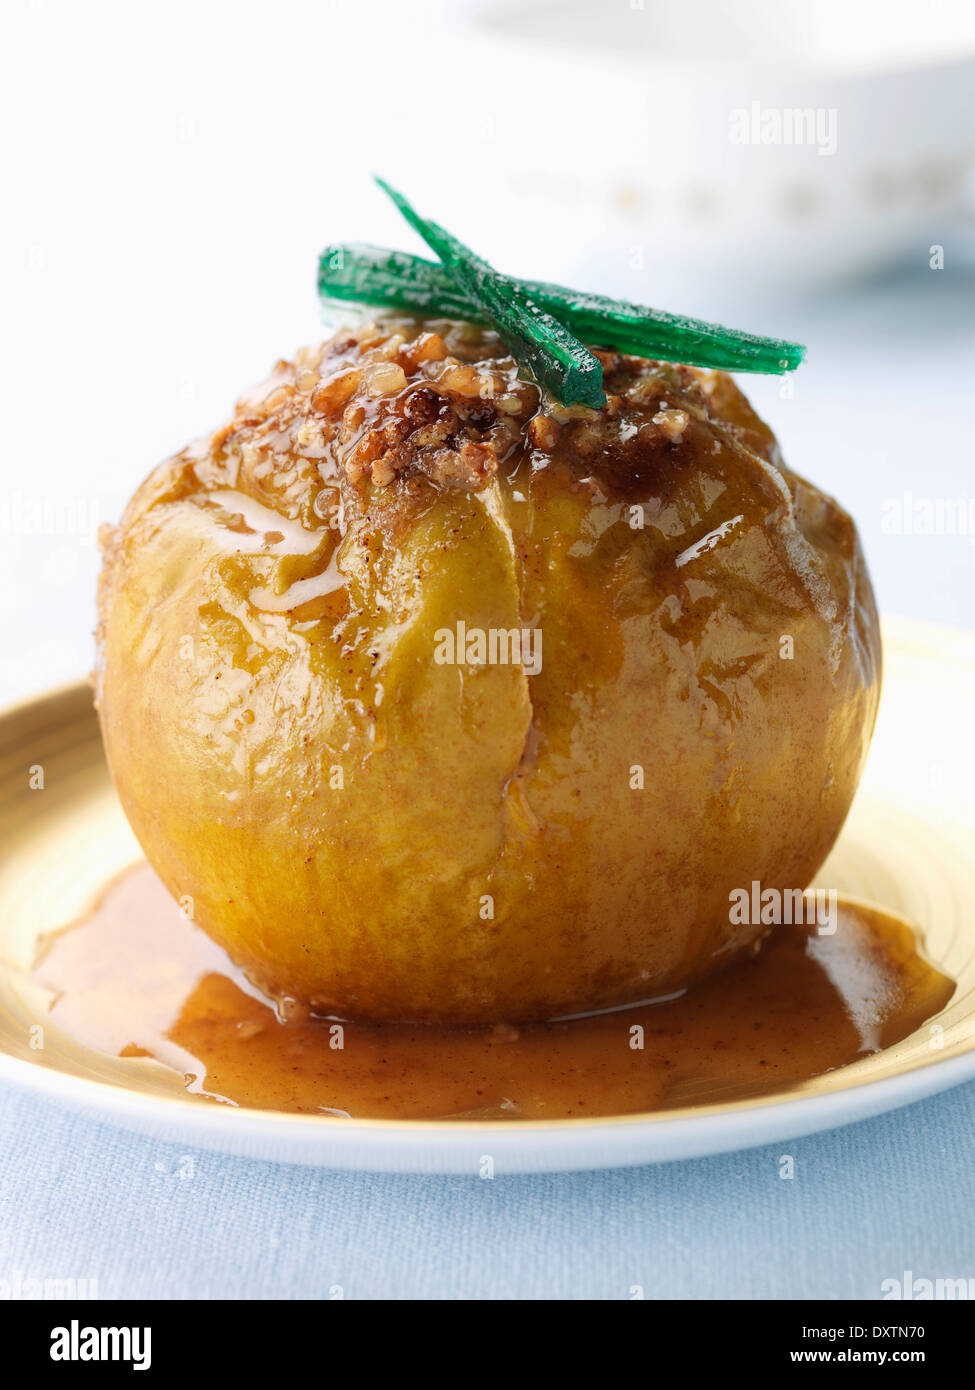 Bake apple stuffed with crushed hazelnuts,brown sugar and cinnamon Stock Photo